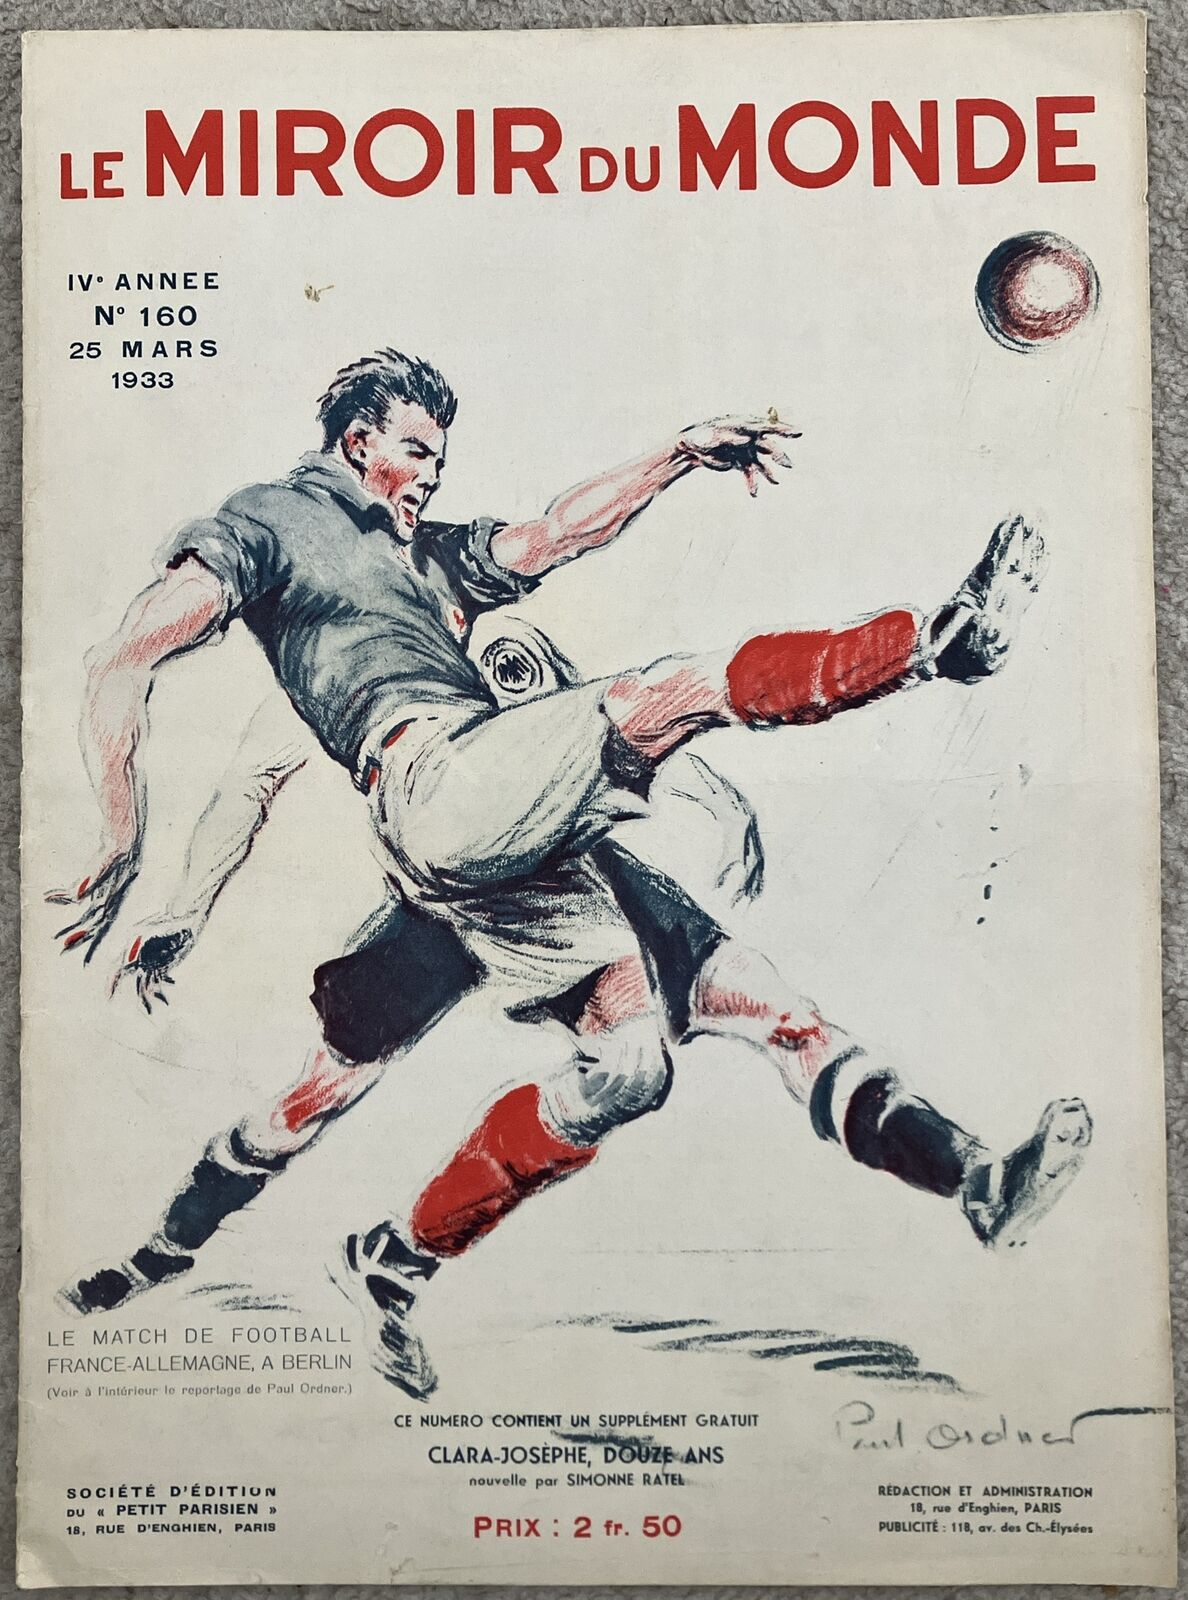 1933 Le Miroir du Monde -Germany v France Football - Roosevelt/Mussolini 25/3/33